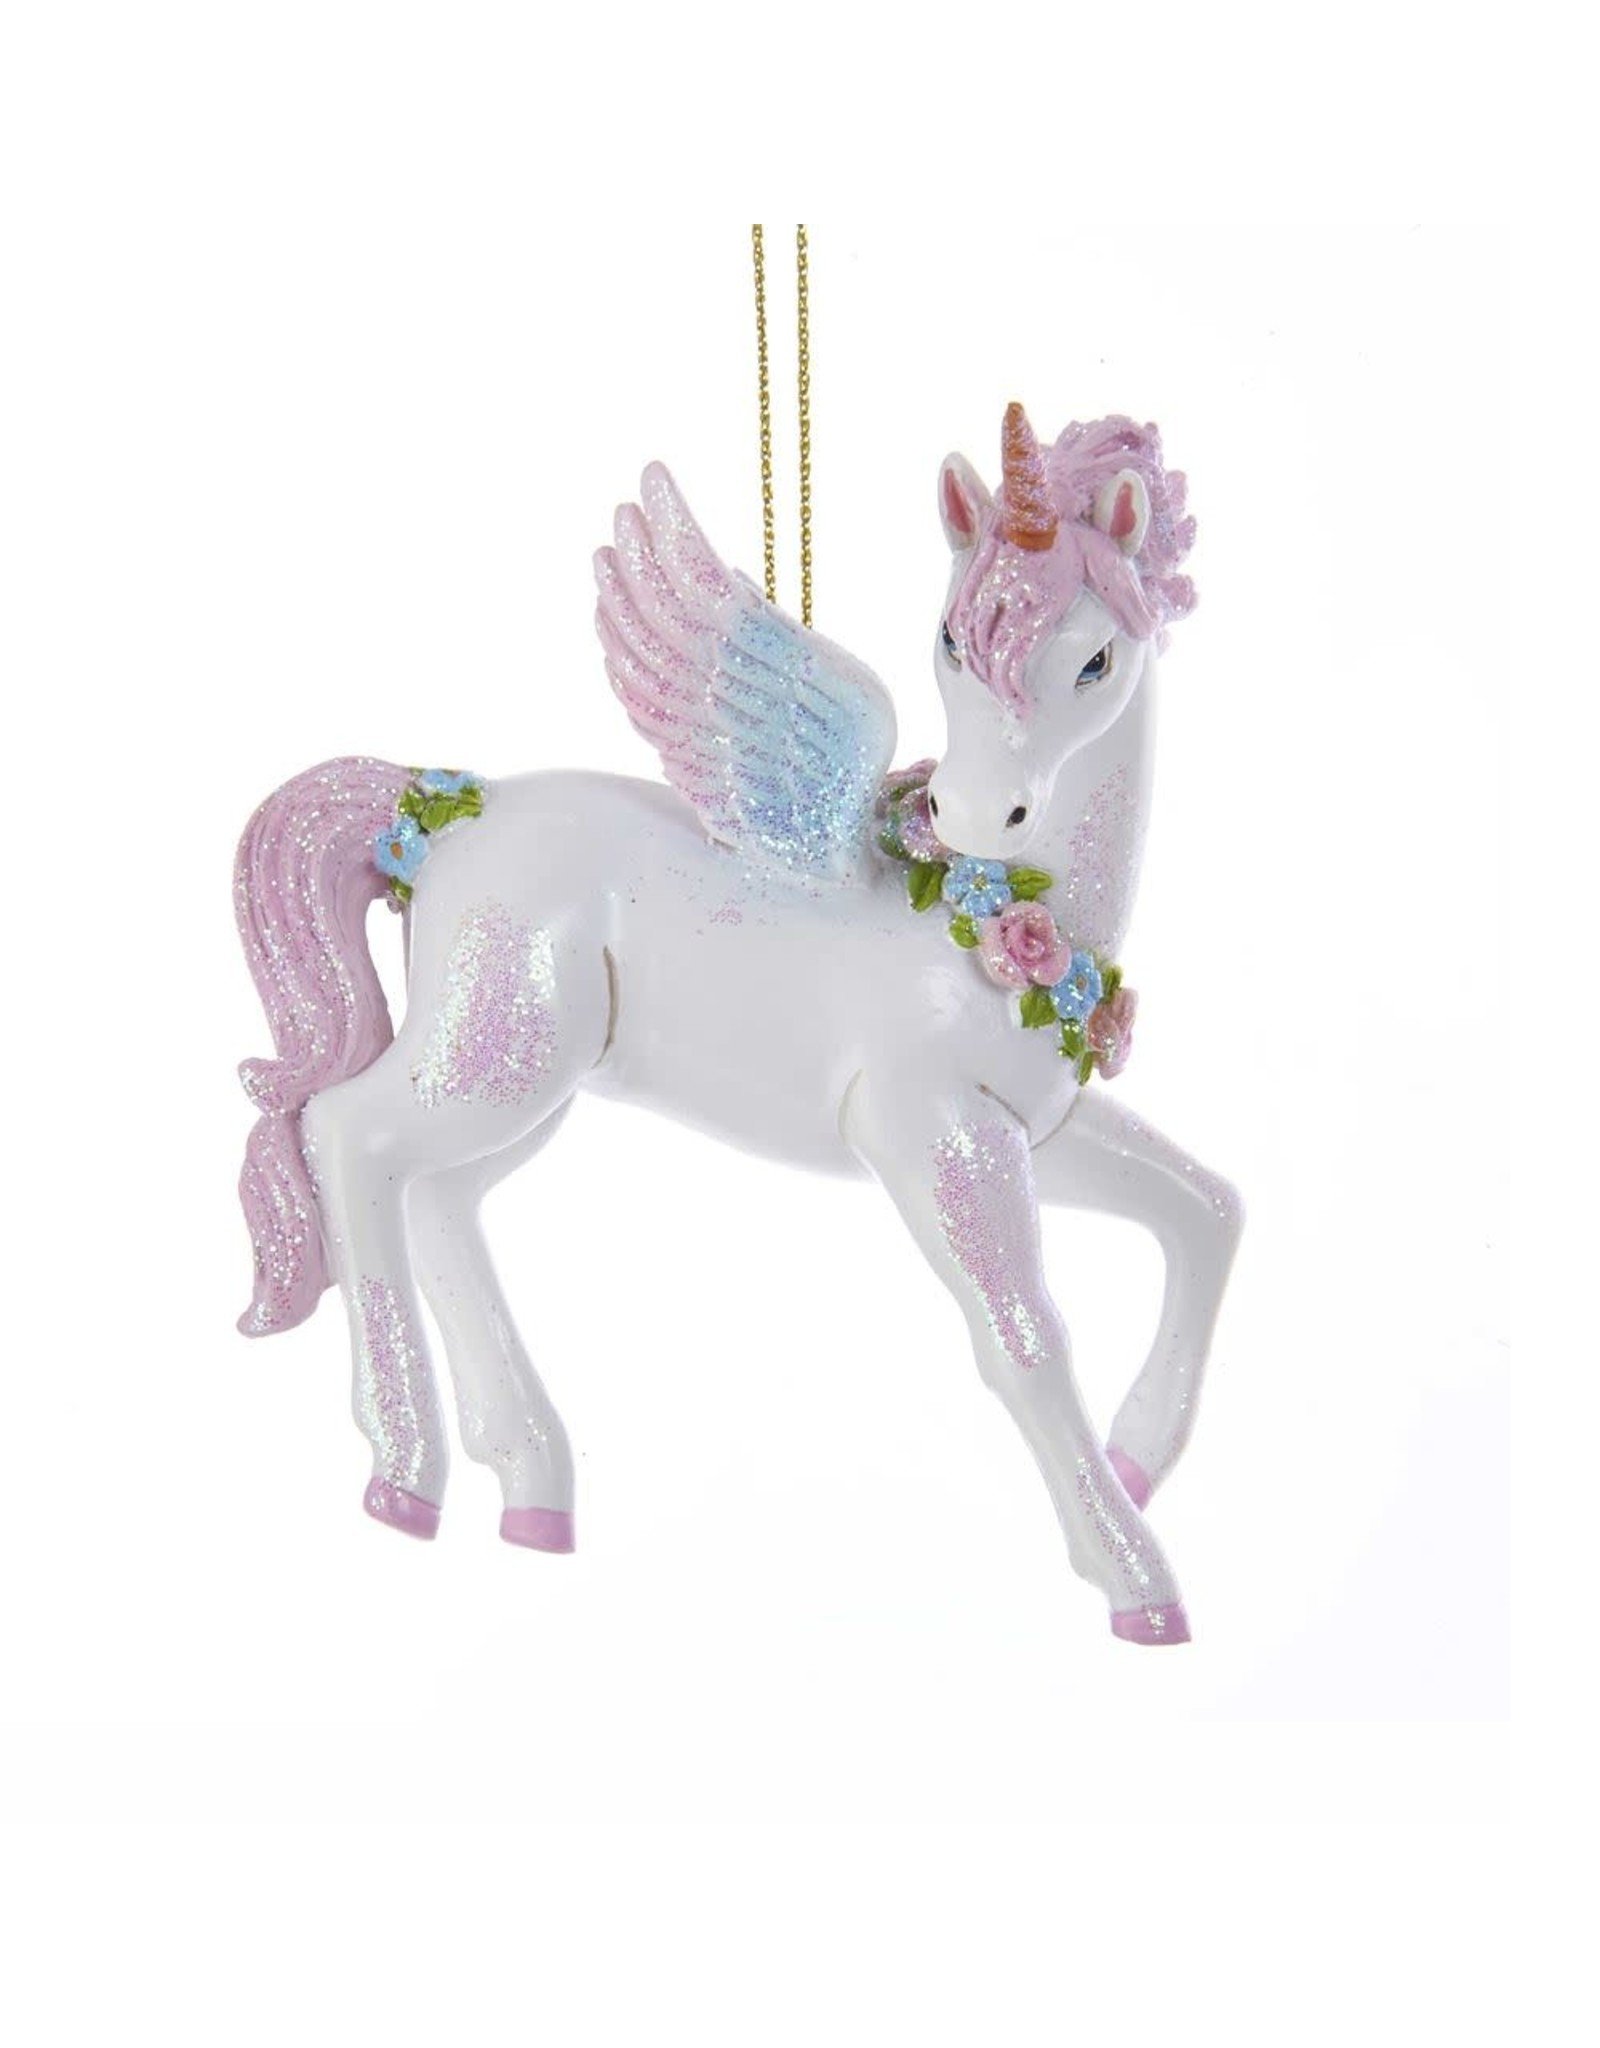 Kurt Adler Glittered Unicorn Fantasy Horse Ornament